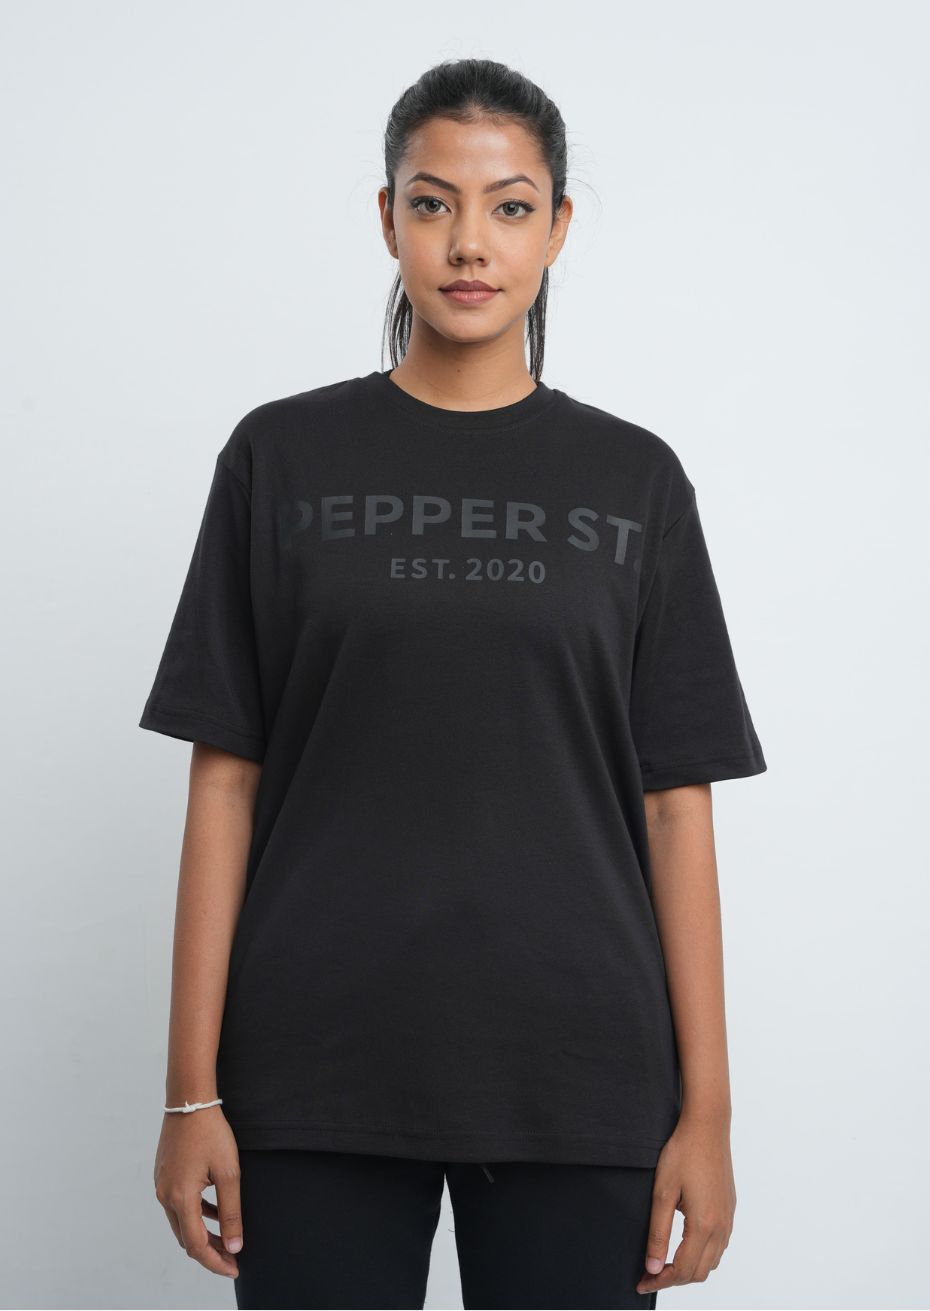 Project Pepper Tee – PEPPER ST.